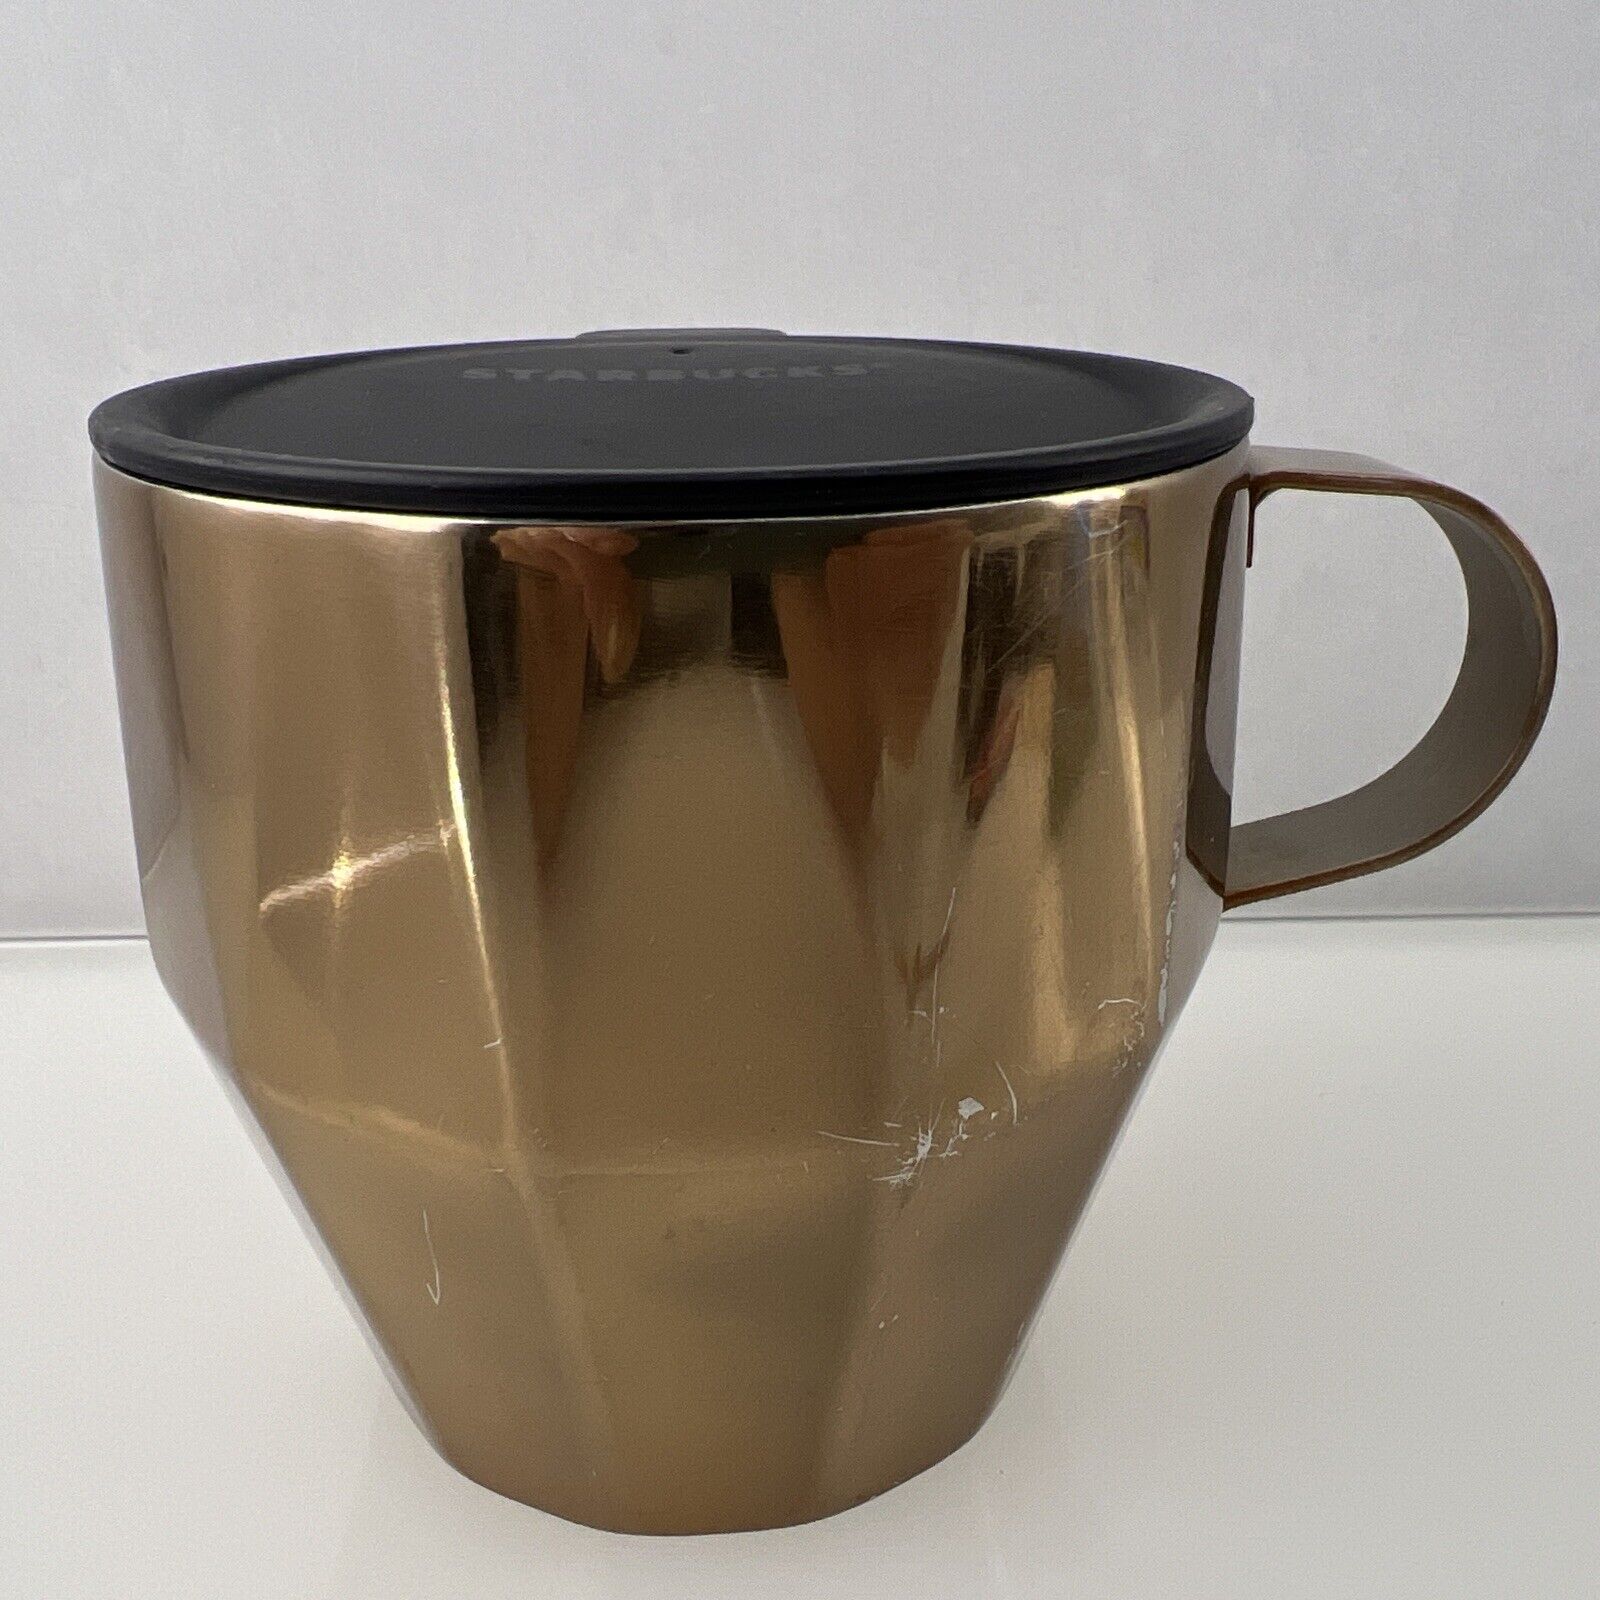 2014 Starbucks Travel Coffee Mug Cup w/Lid Geometric Copper / Bronze Color 14 oz